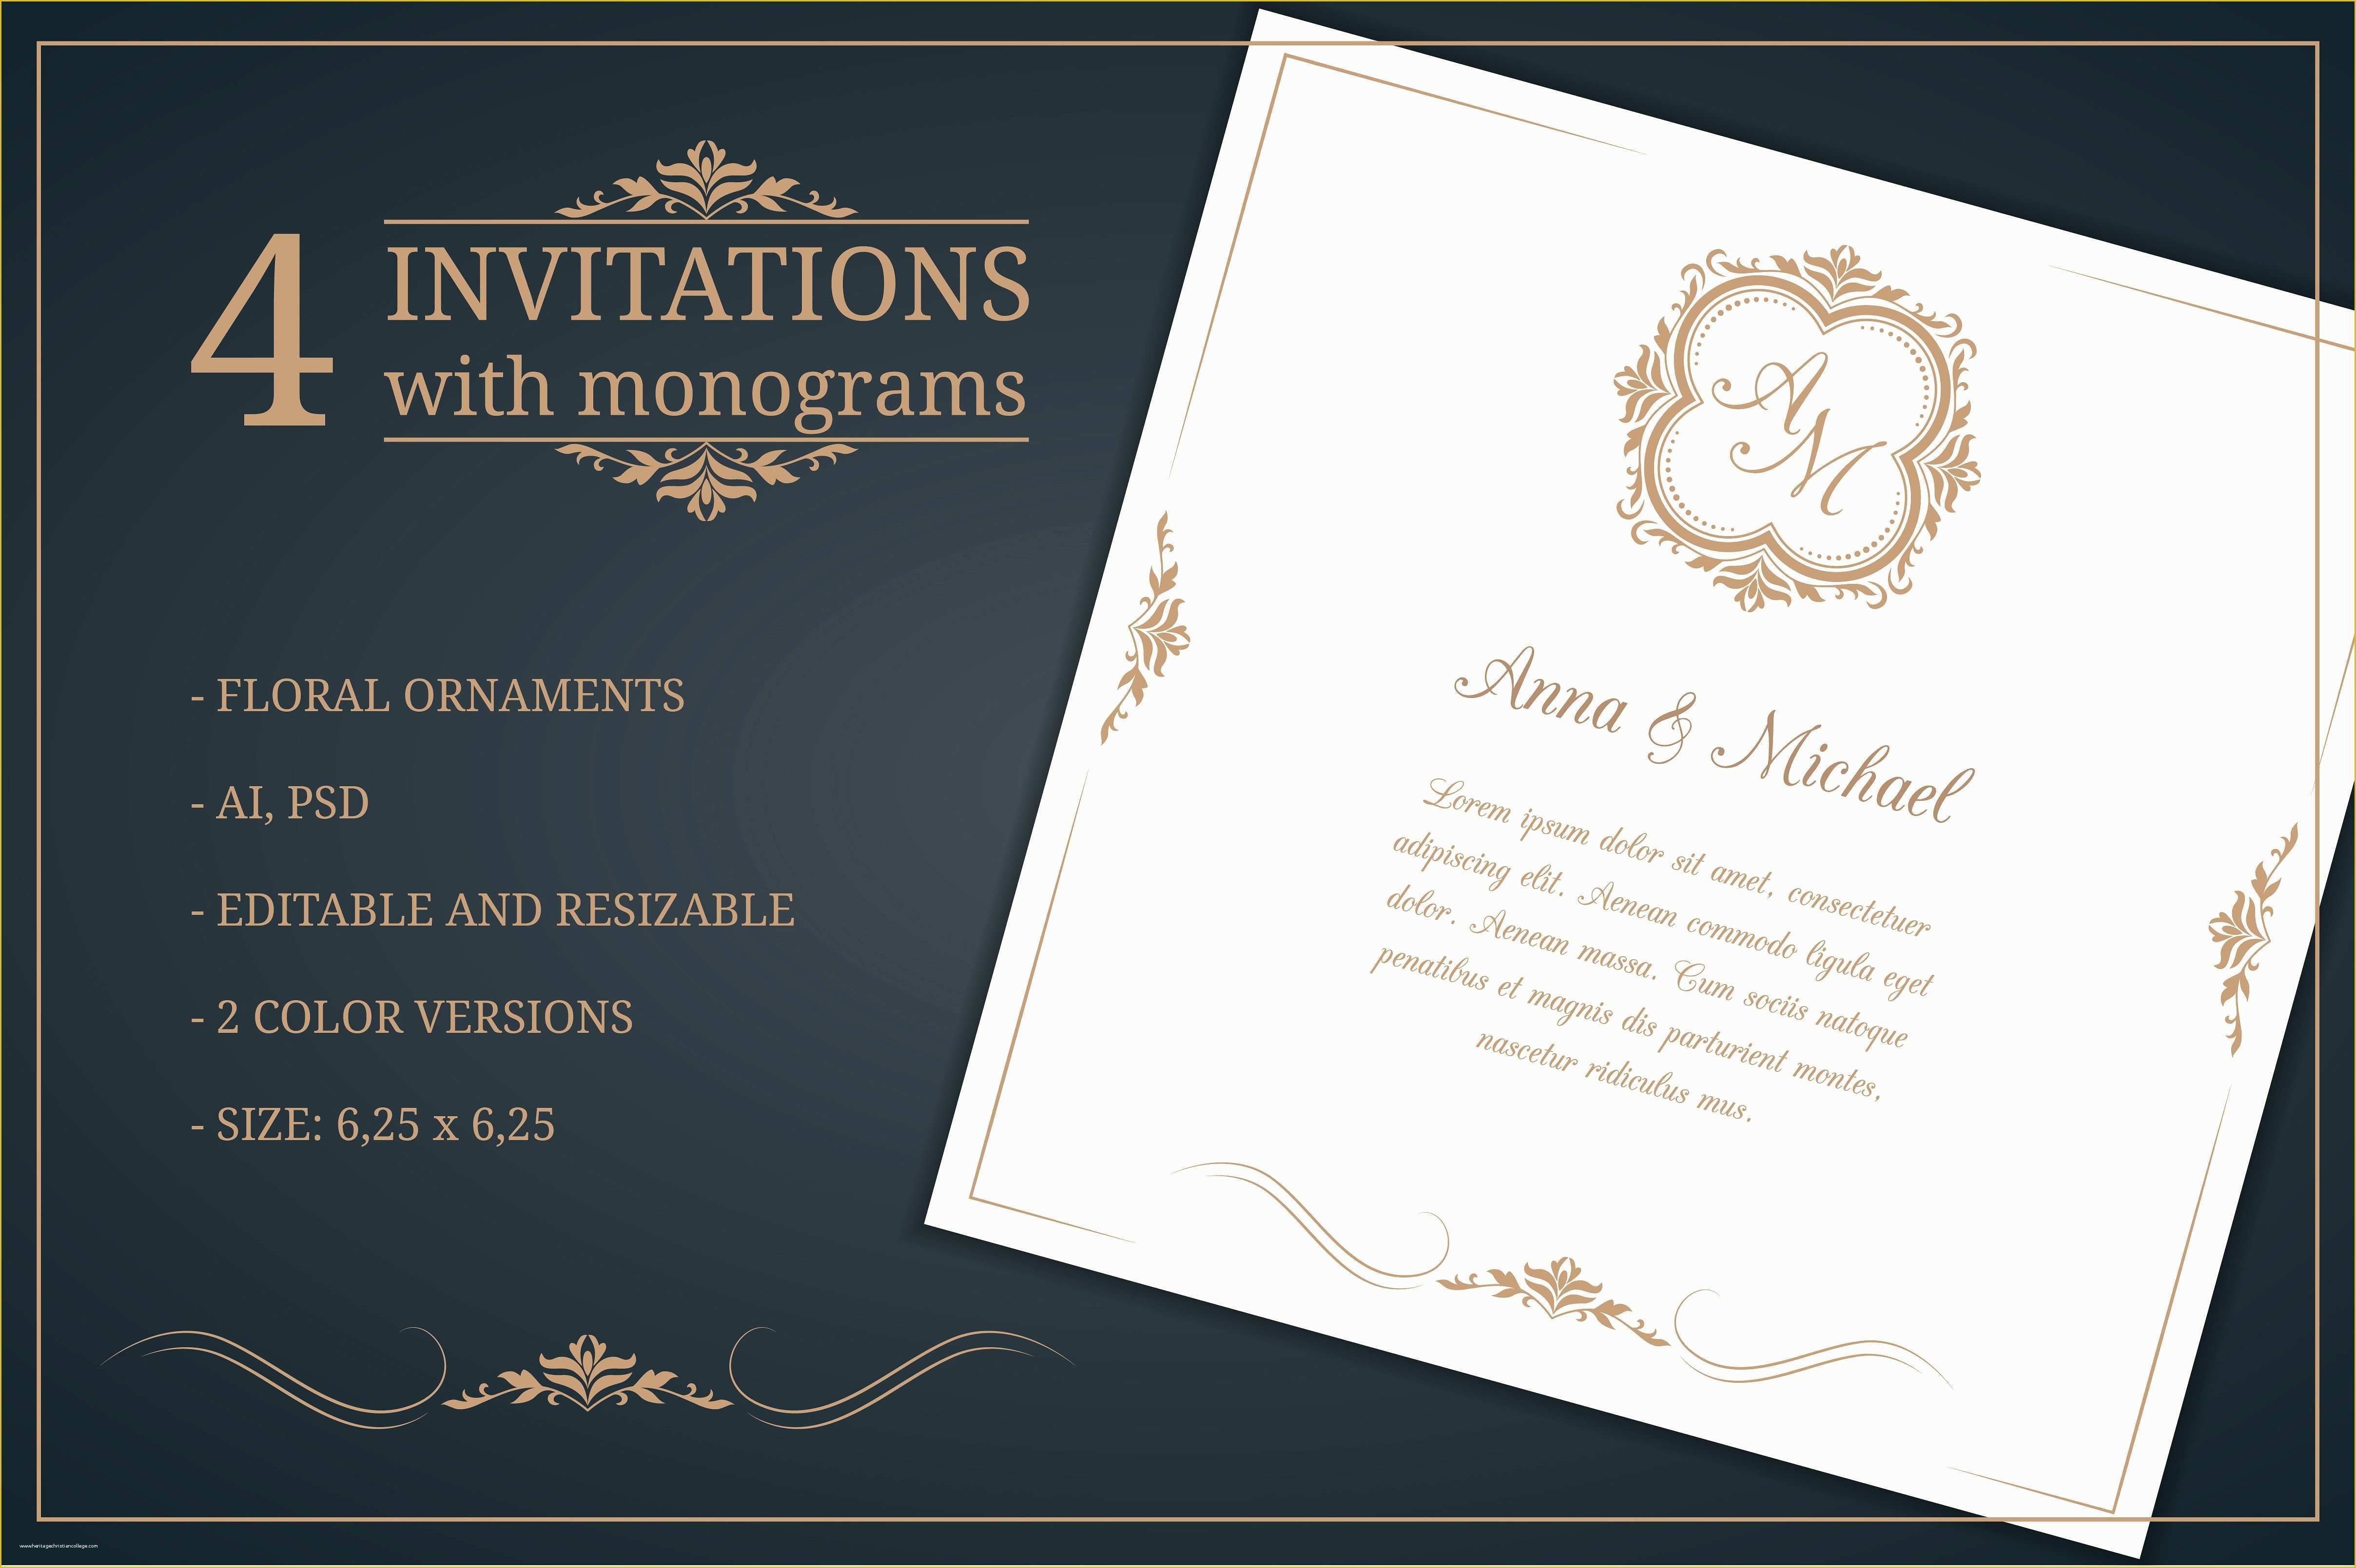 Editable Wedding Invitation Templates Free Download Of Wedding Invitations with Monograms Invitation Templates